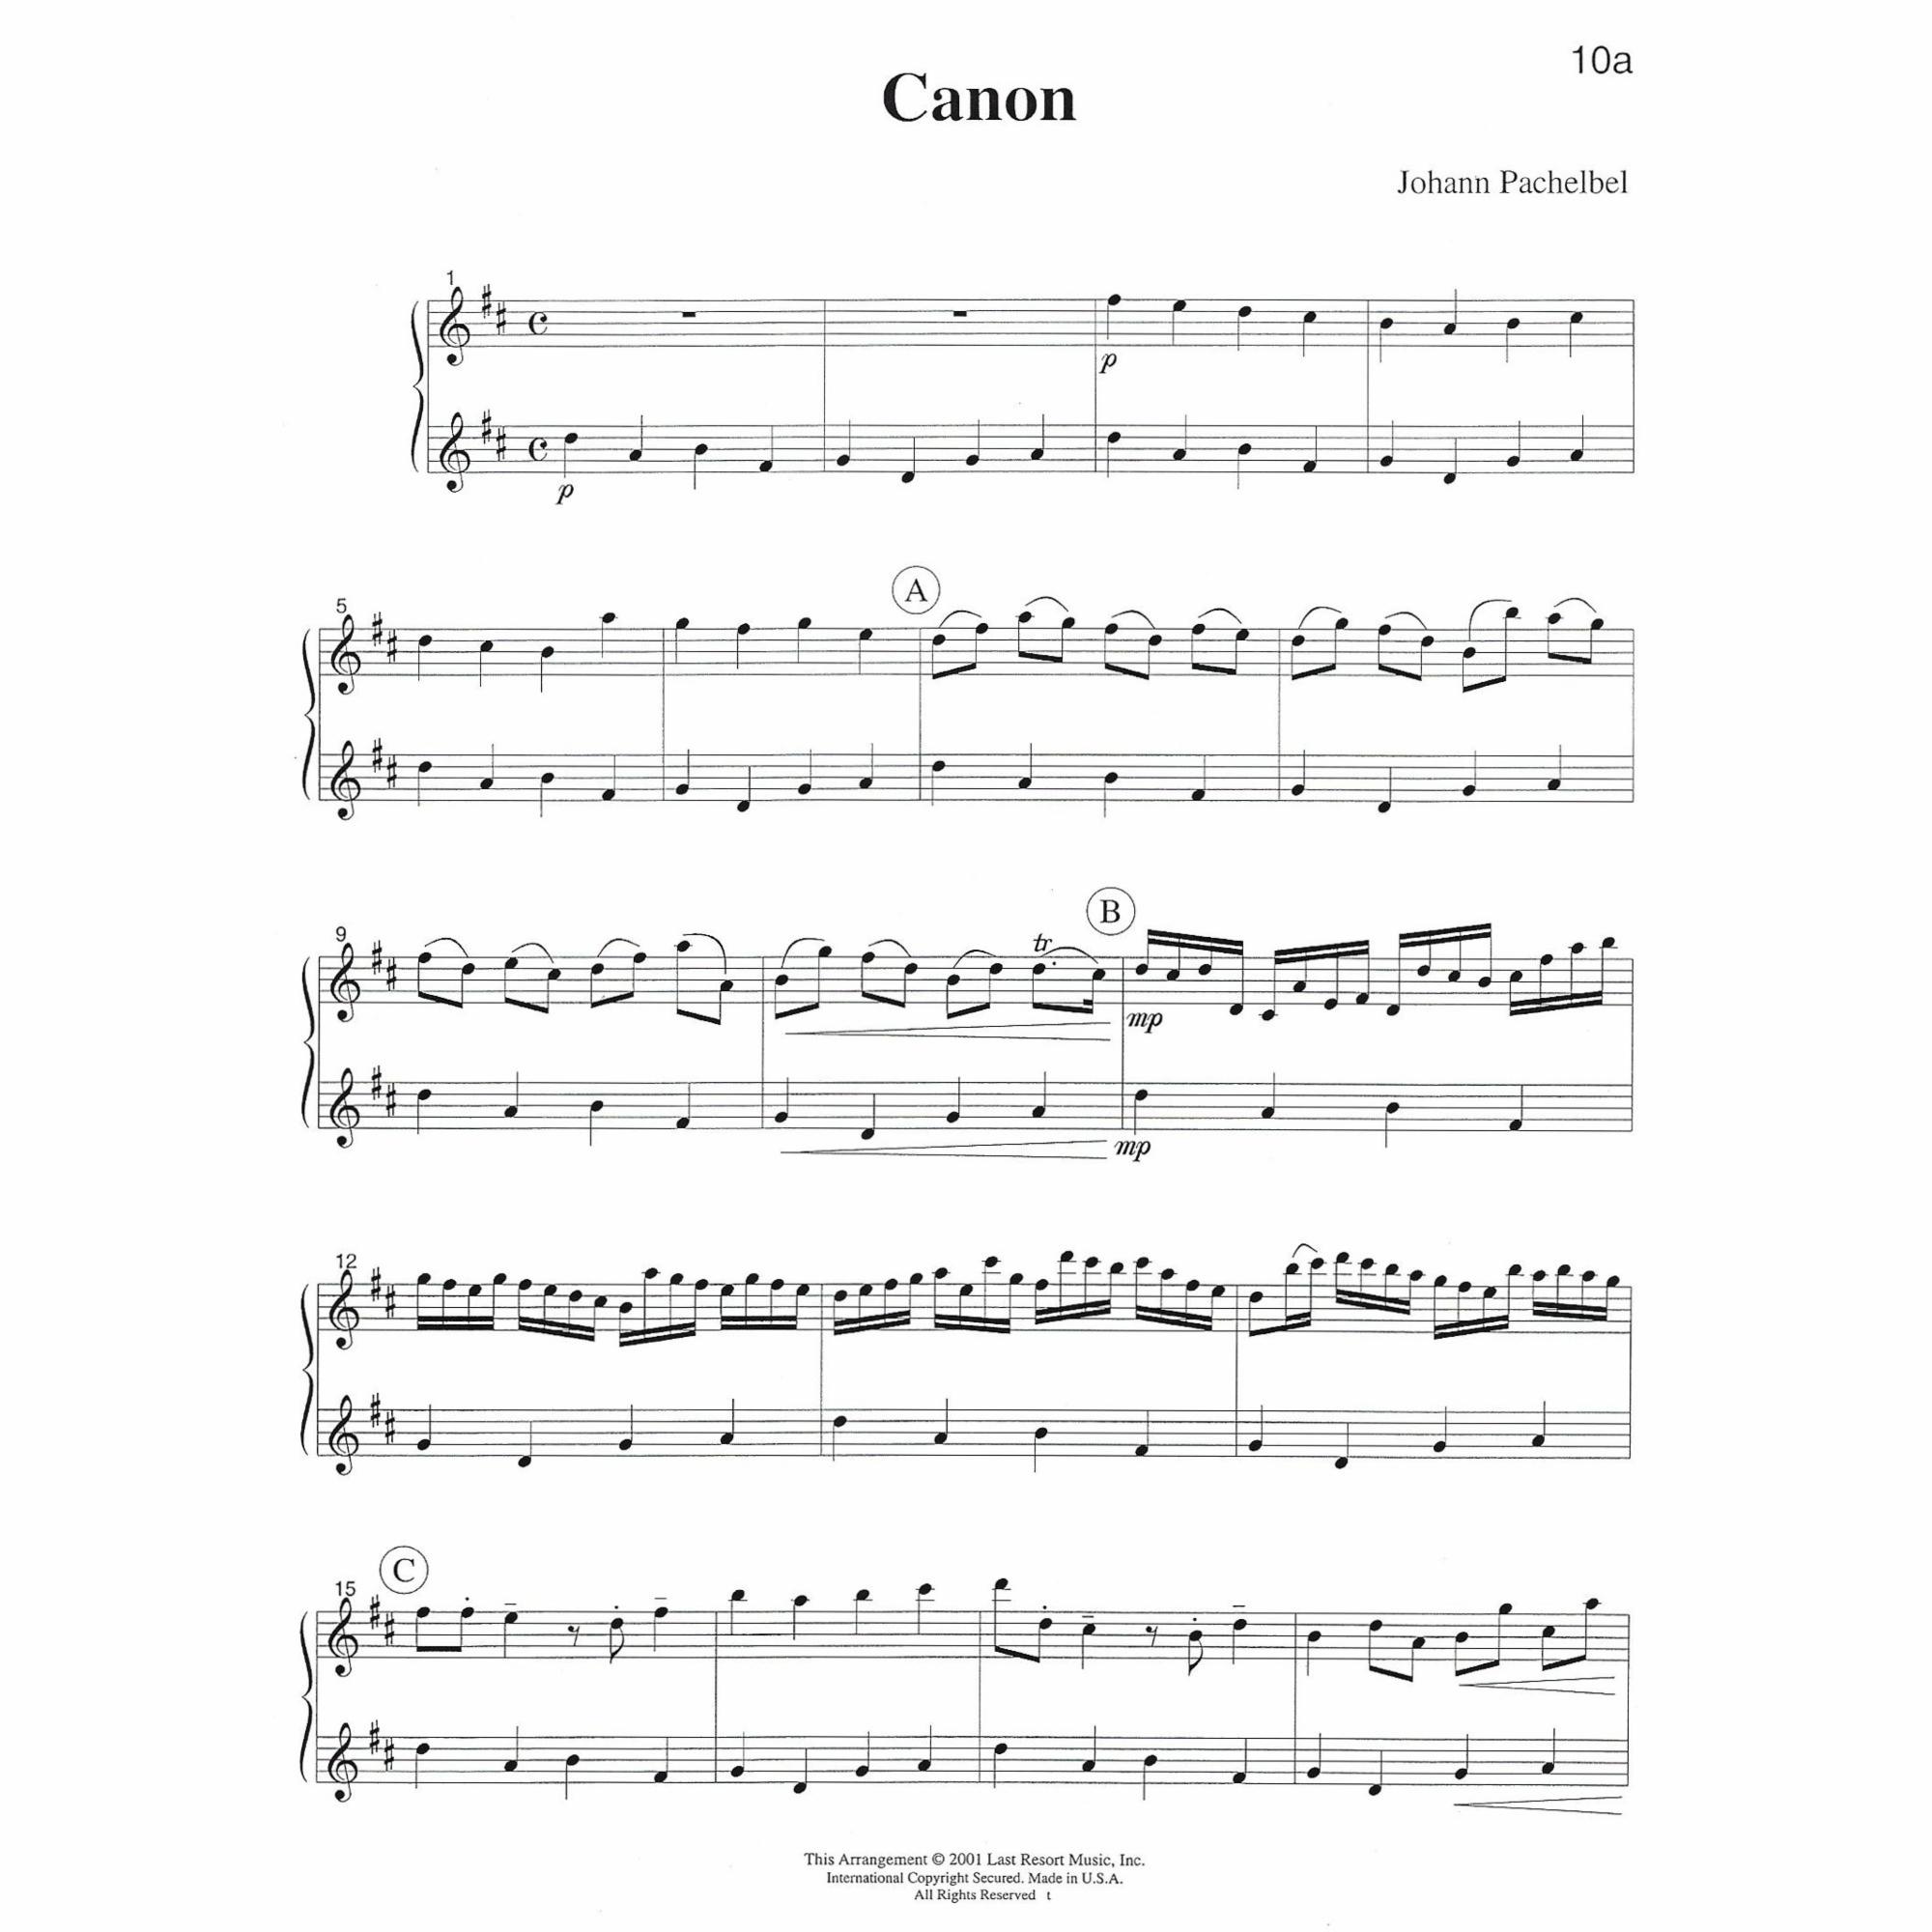 Sample: Two Violins (Pg. 10a)